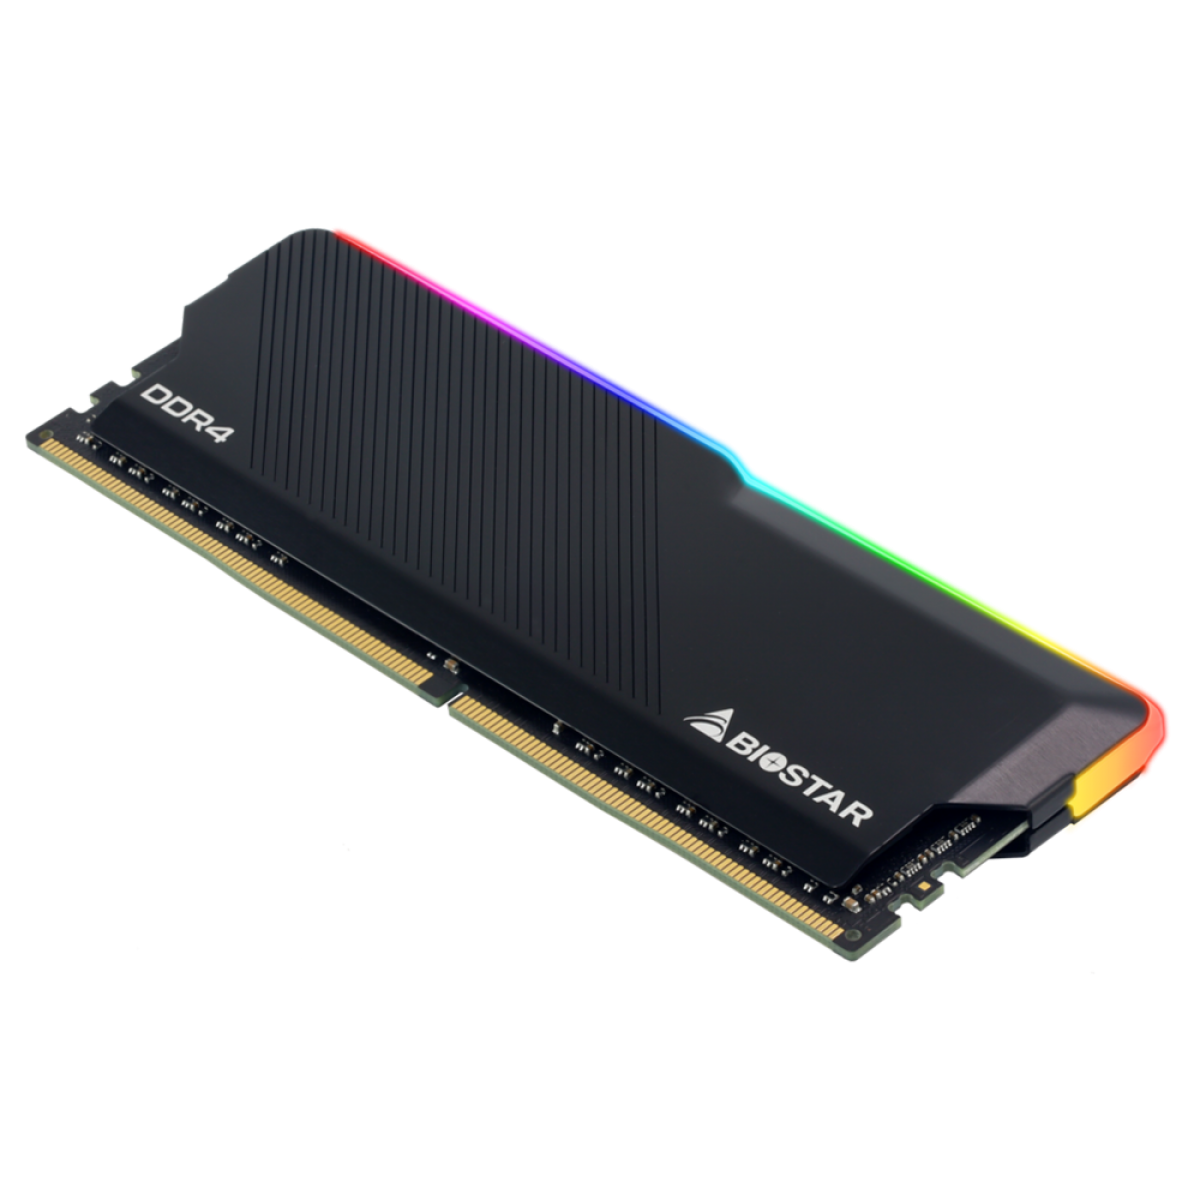 Memória DDR4 Biostar Gaming X, 16GB (2x8GB), 3600MHz, RGB, Black, DHD36EU4RP-VB18A-BS2